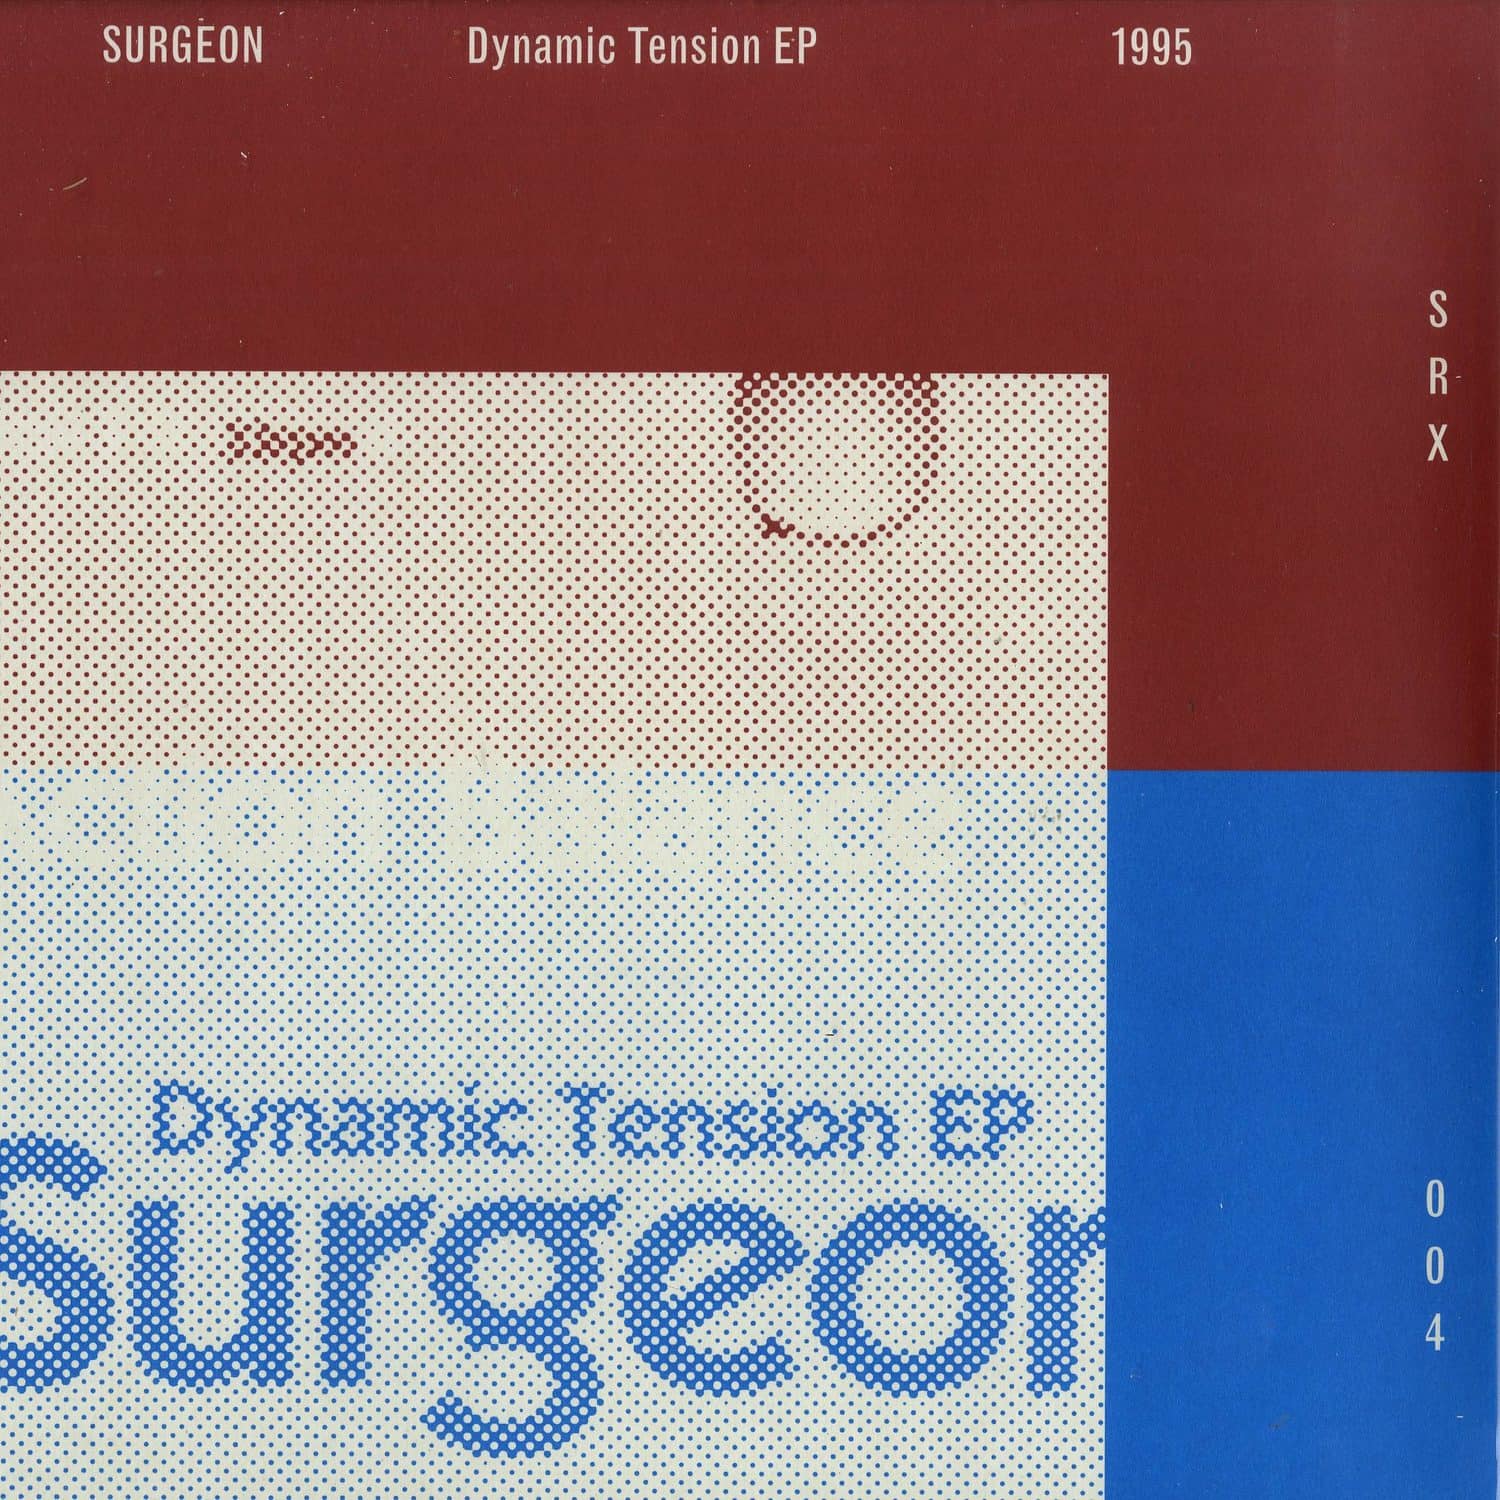 Surgeon - DYNAMIC TENSION EP 